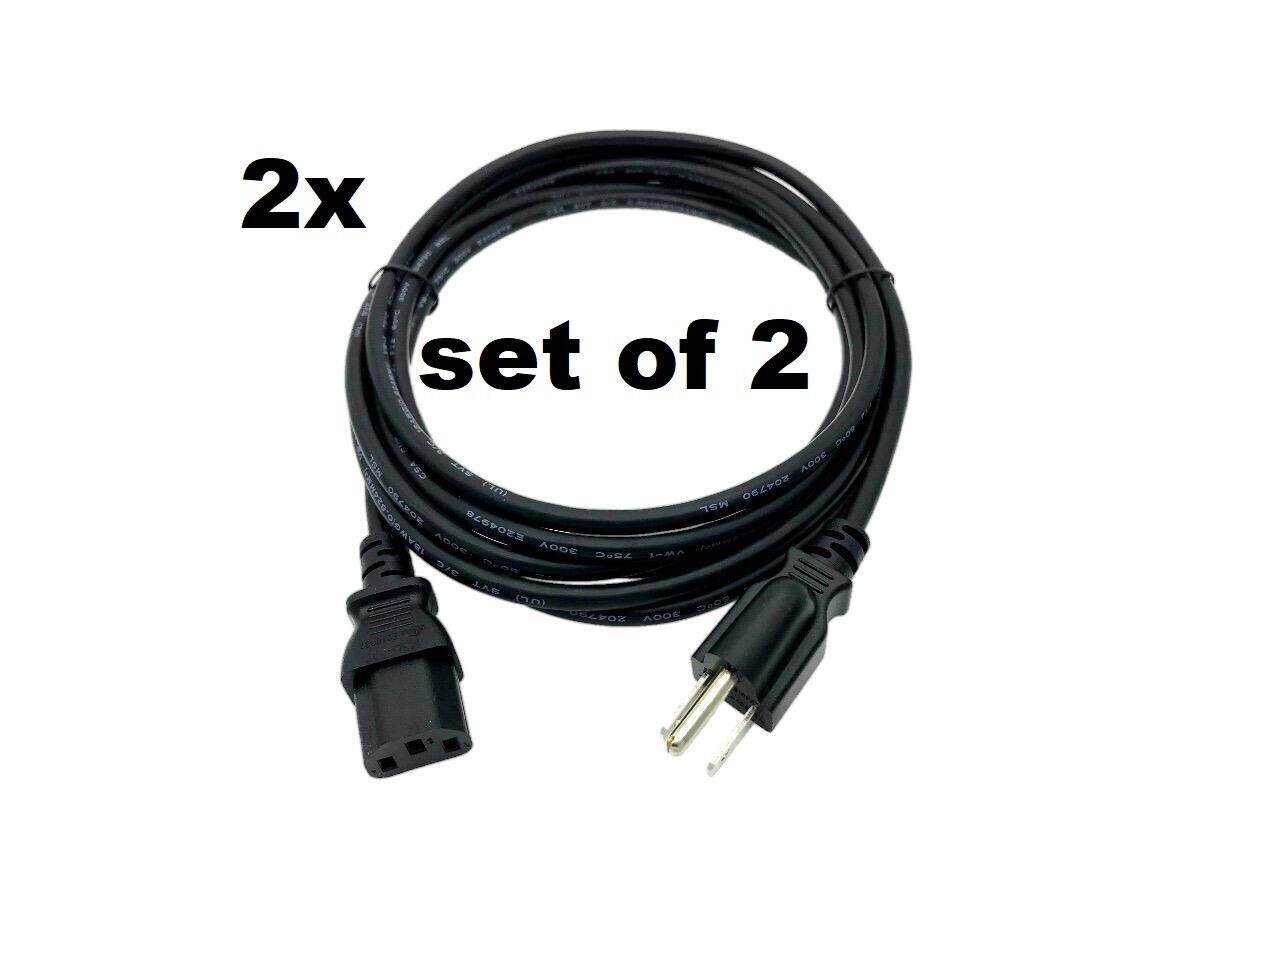 2x 25ft Long 16 gauge AC Power Cord Heavy Duty IEC320 Cable/Wire PC Desktop